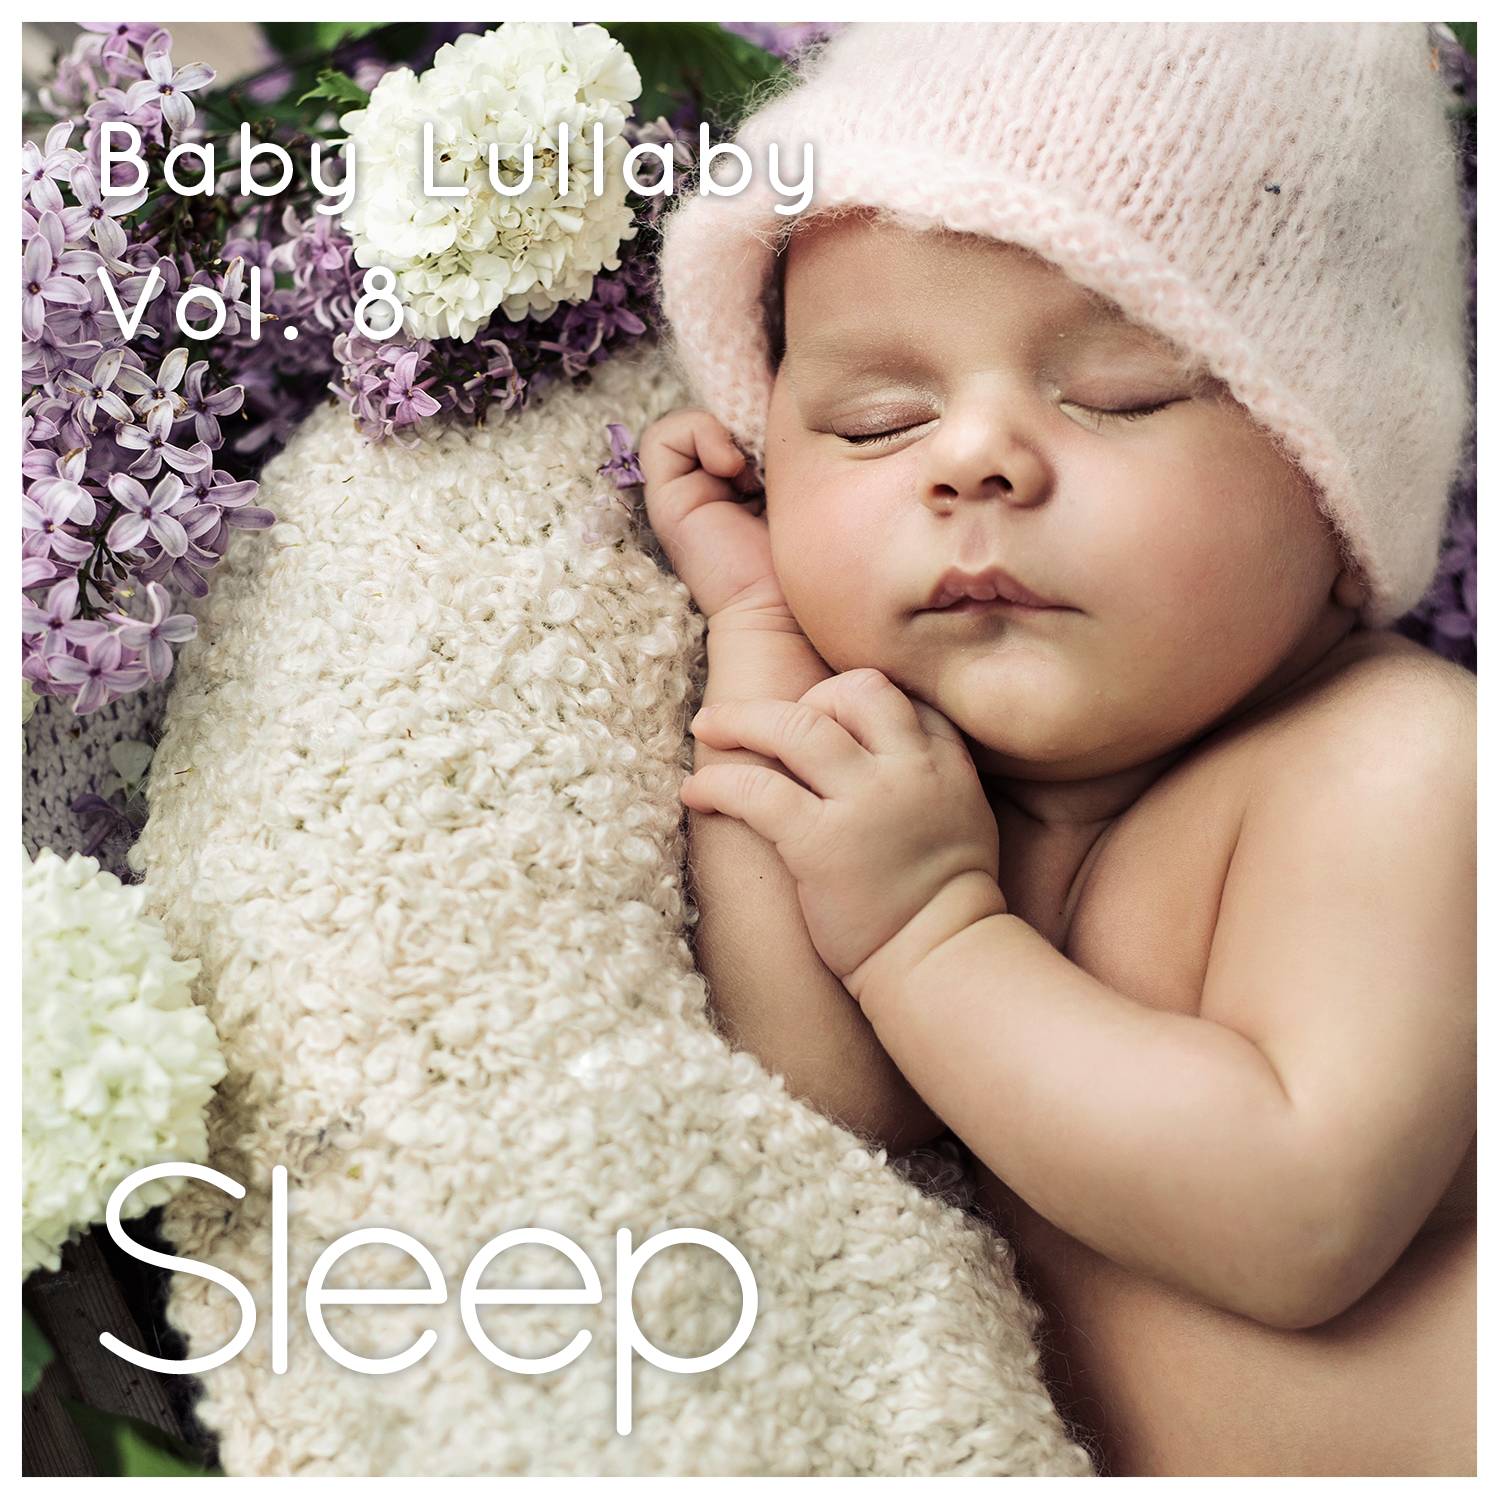 Baby Sleep - The Tumble Dryer Lullaby, Vol. 8